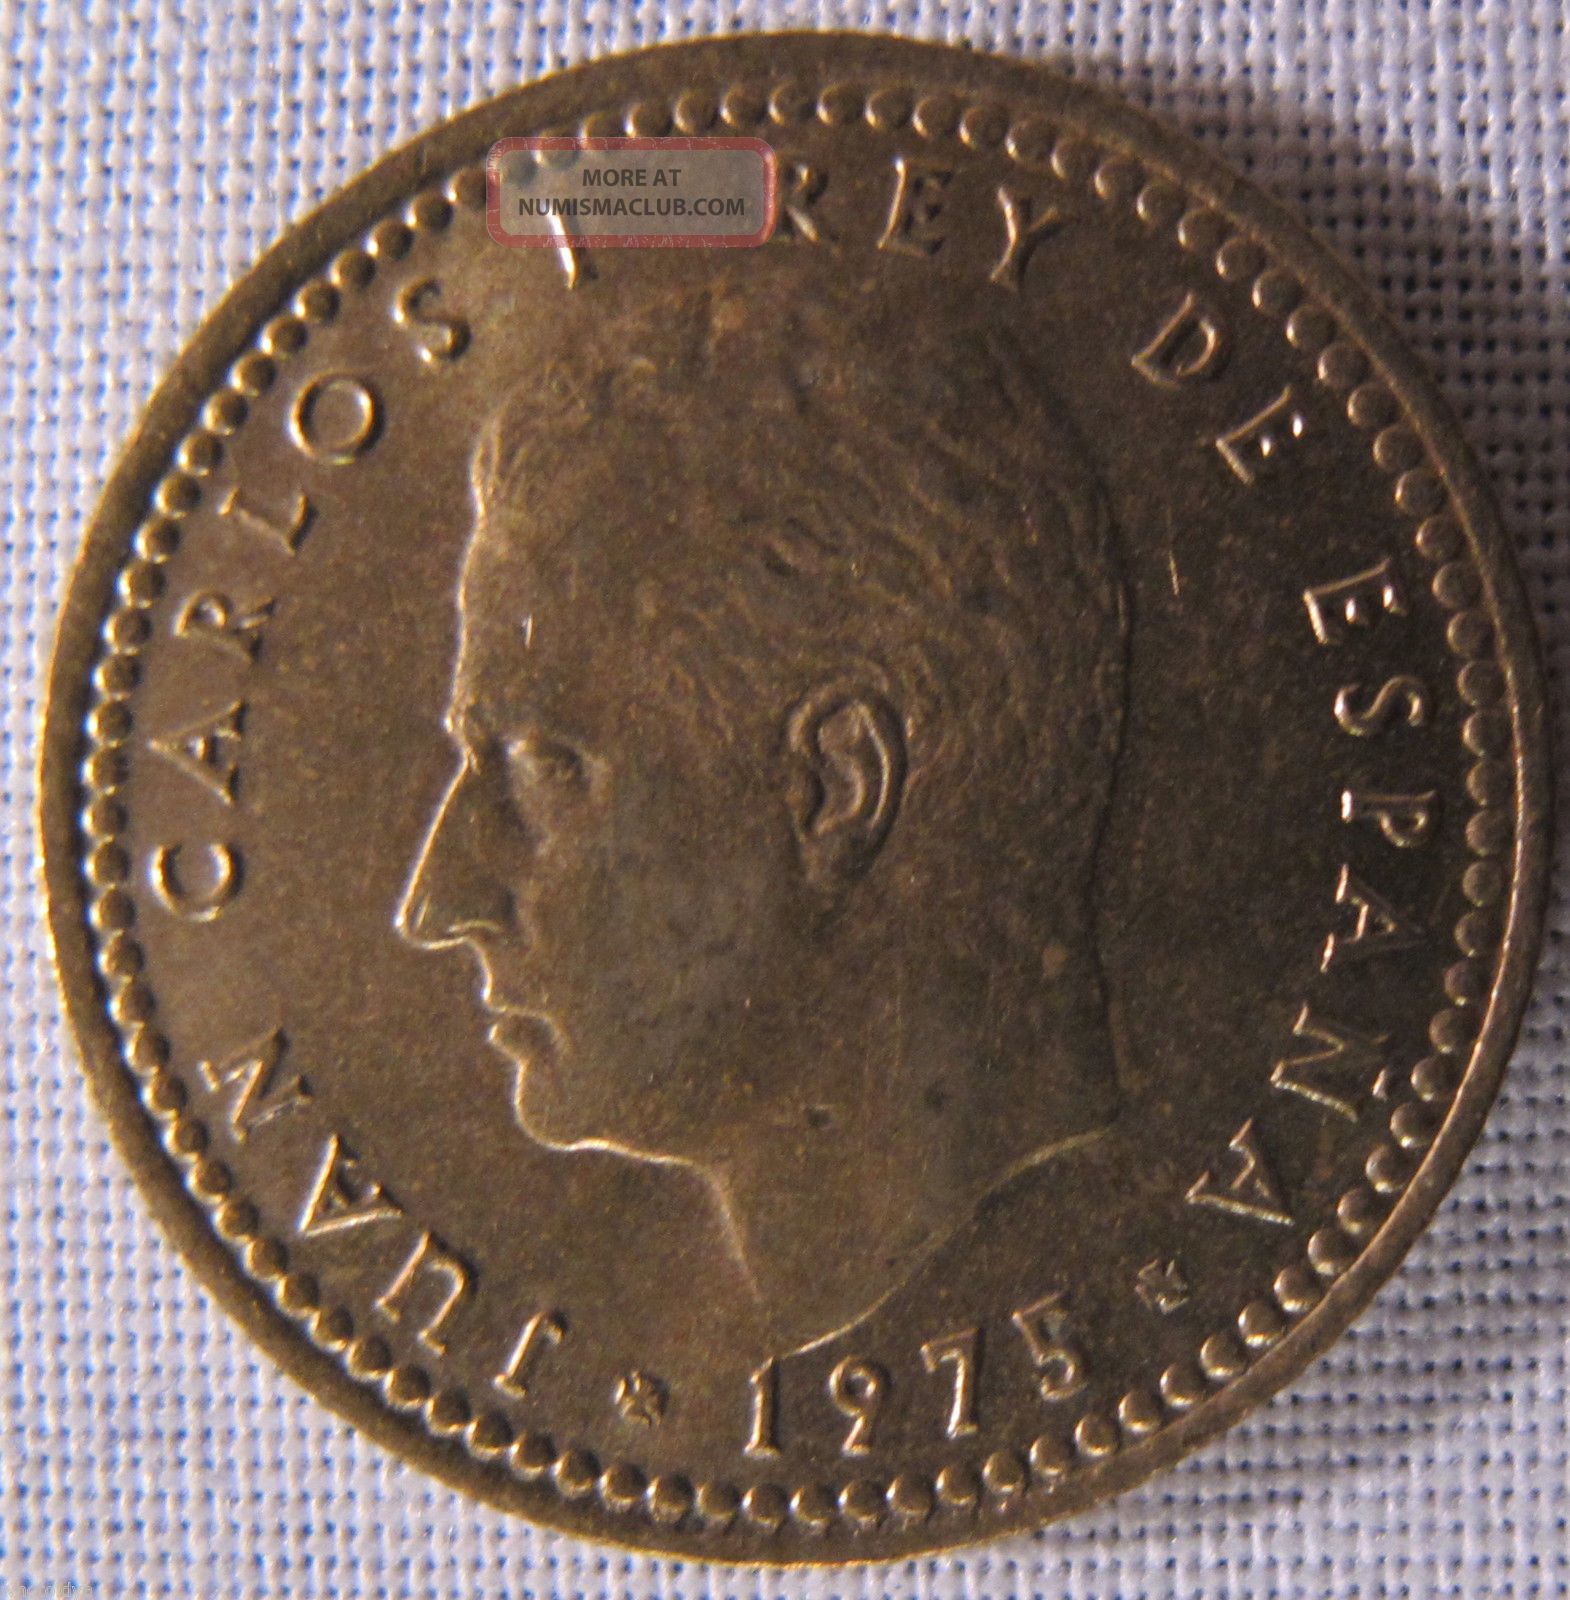 old spanish peseta coins